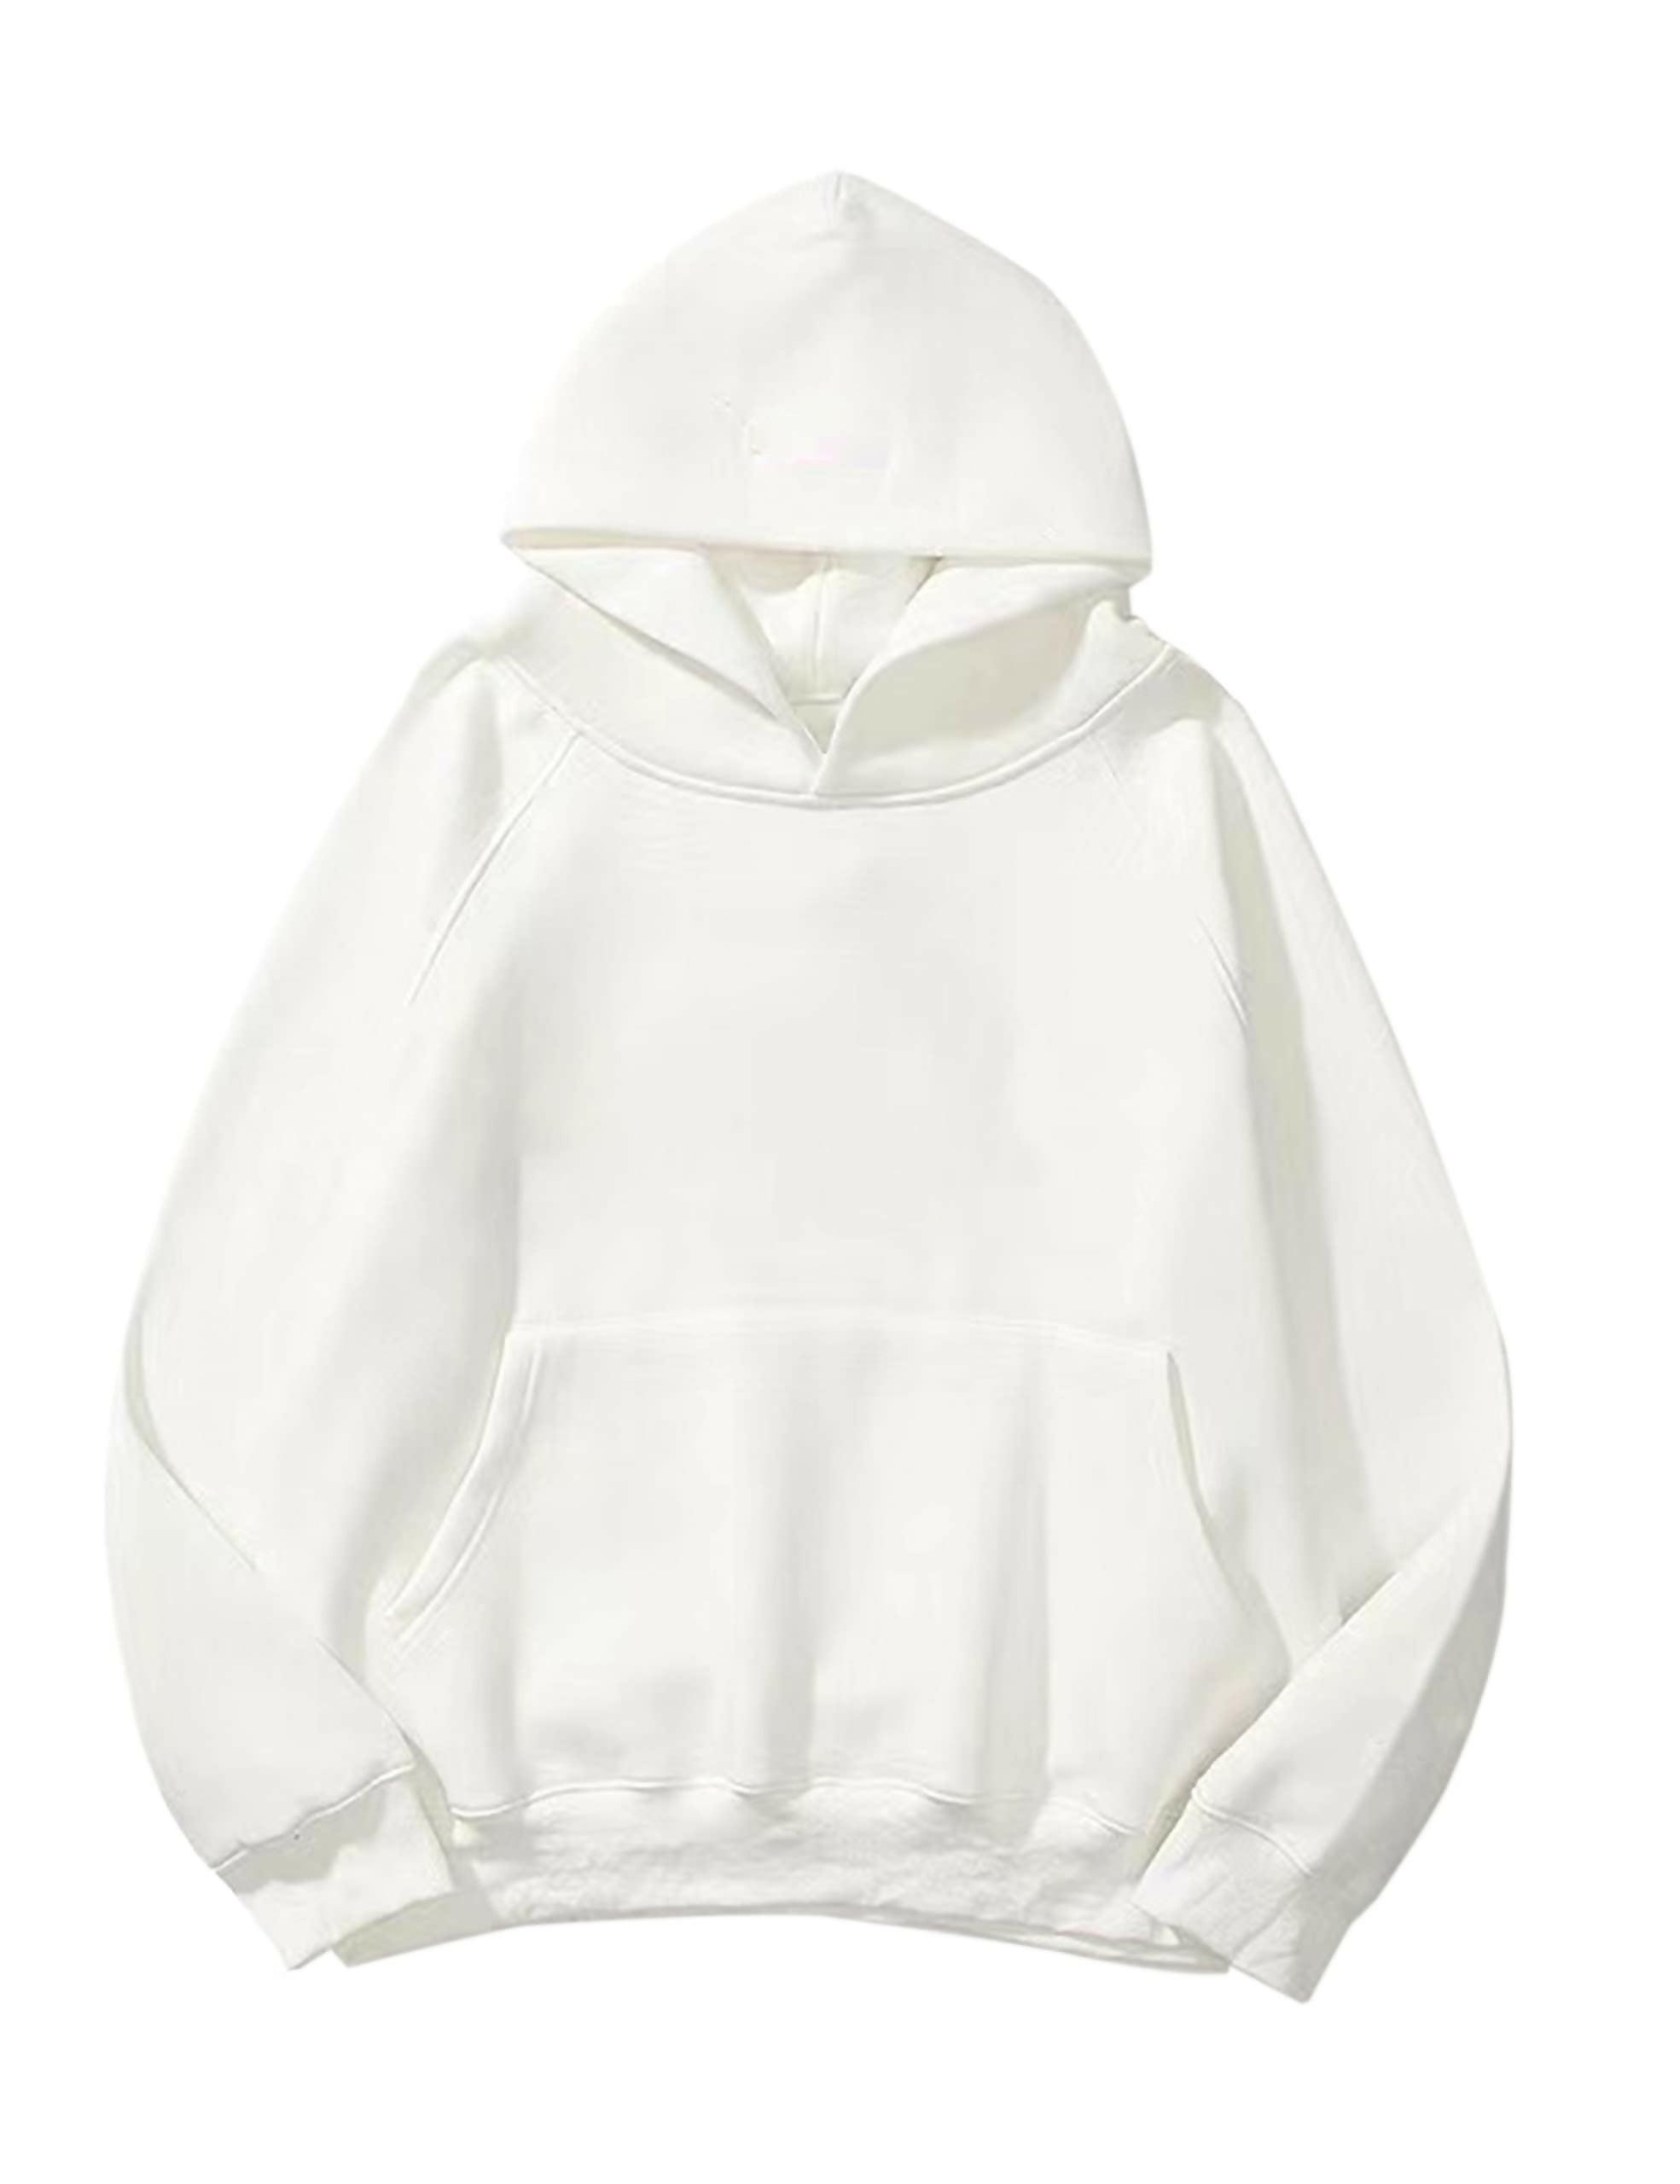 Khanani's Grey Plain Basic Pullover Hoodie for Winter - Fleece Hooded Hoodies for Men and Women - ValueBox